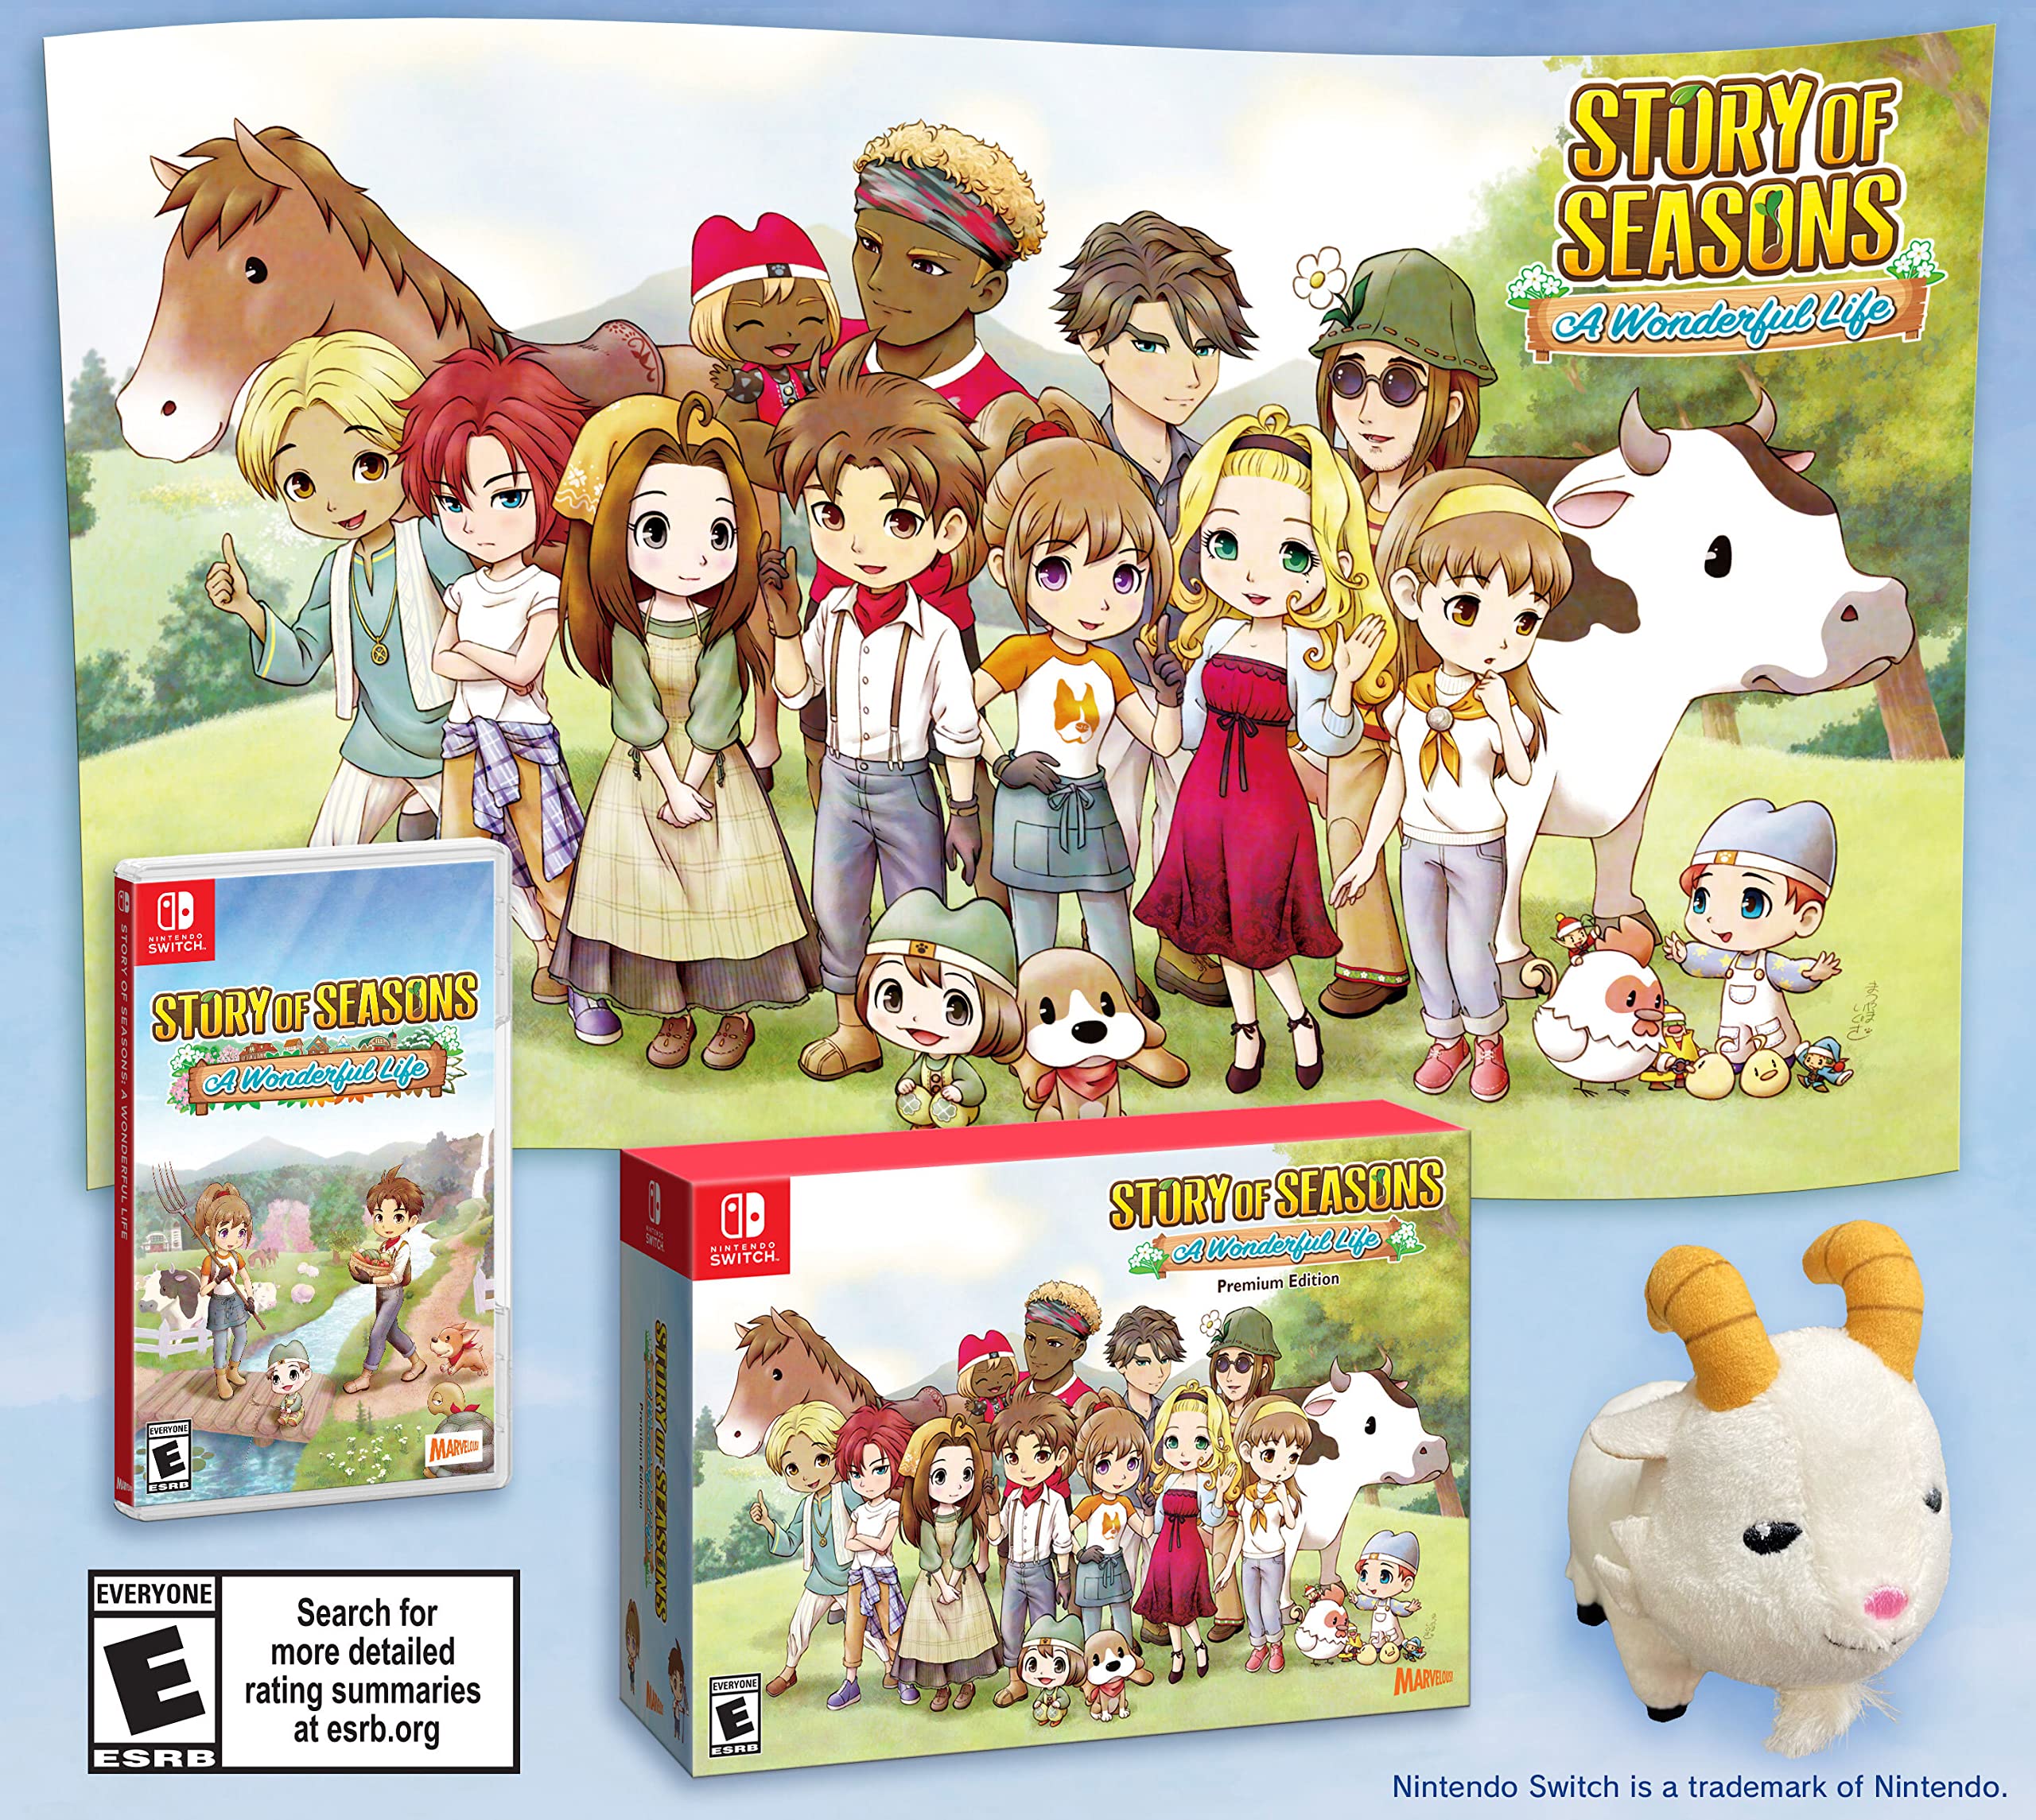 Story of Seasons: A Wonderful Life Premium Edition (Nintendo Switch, Physical) $50 + Free Shipping